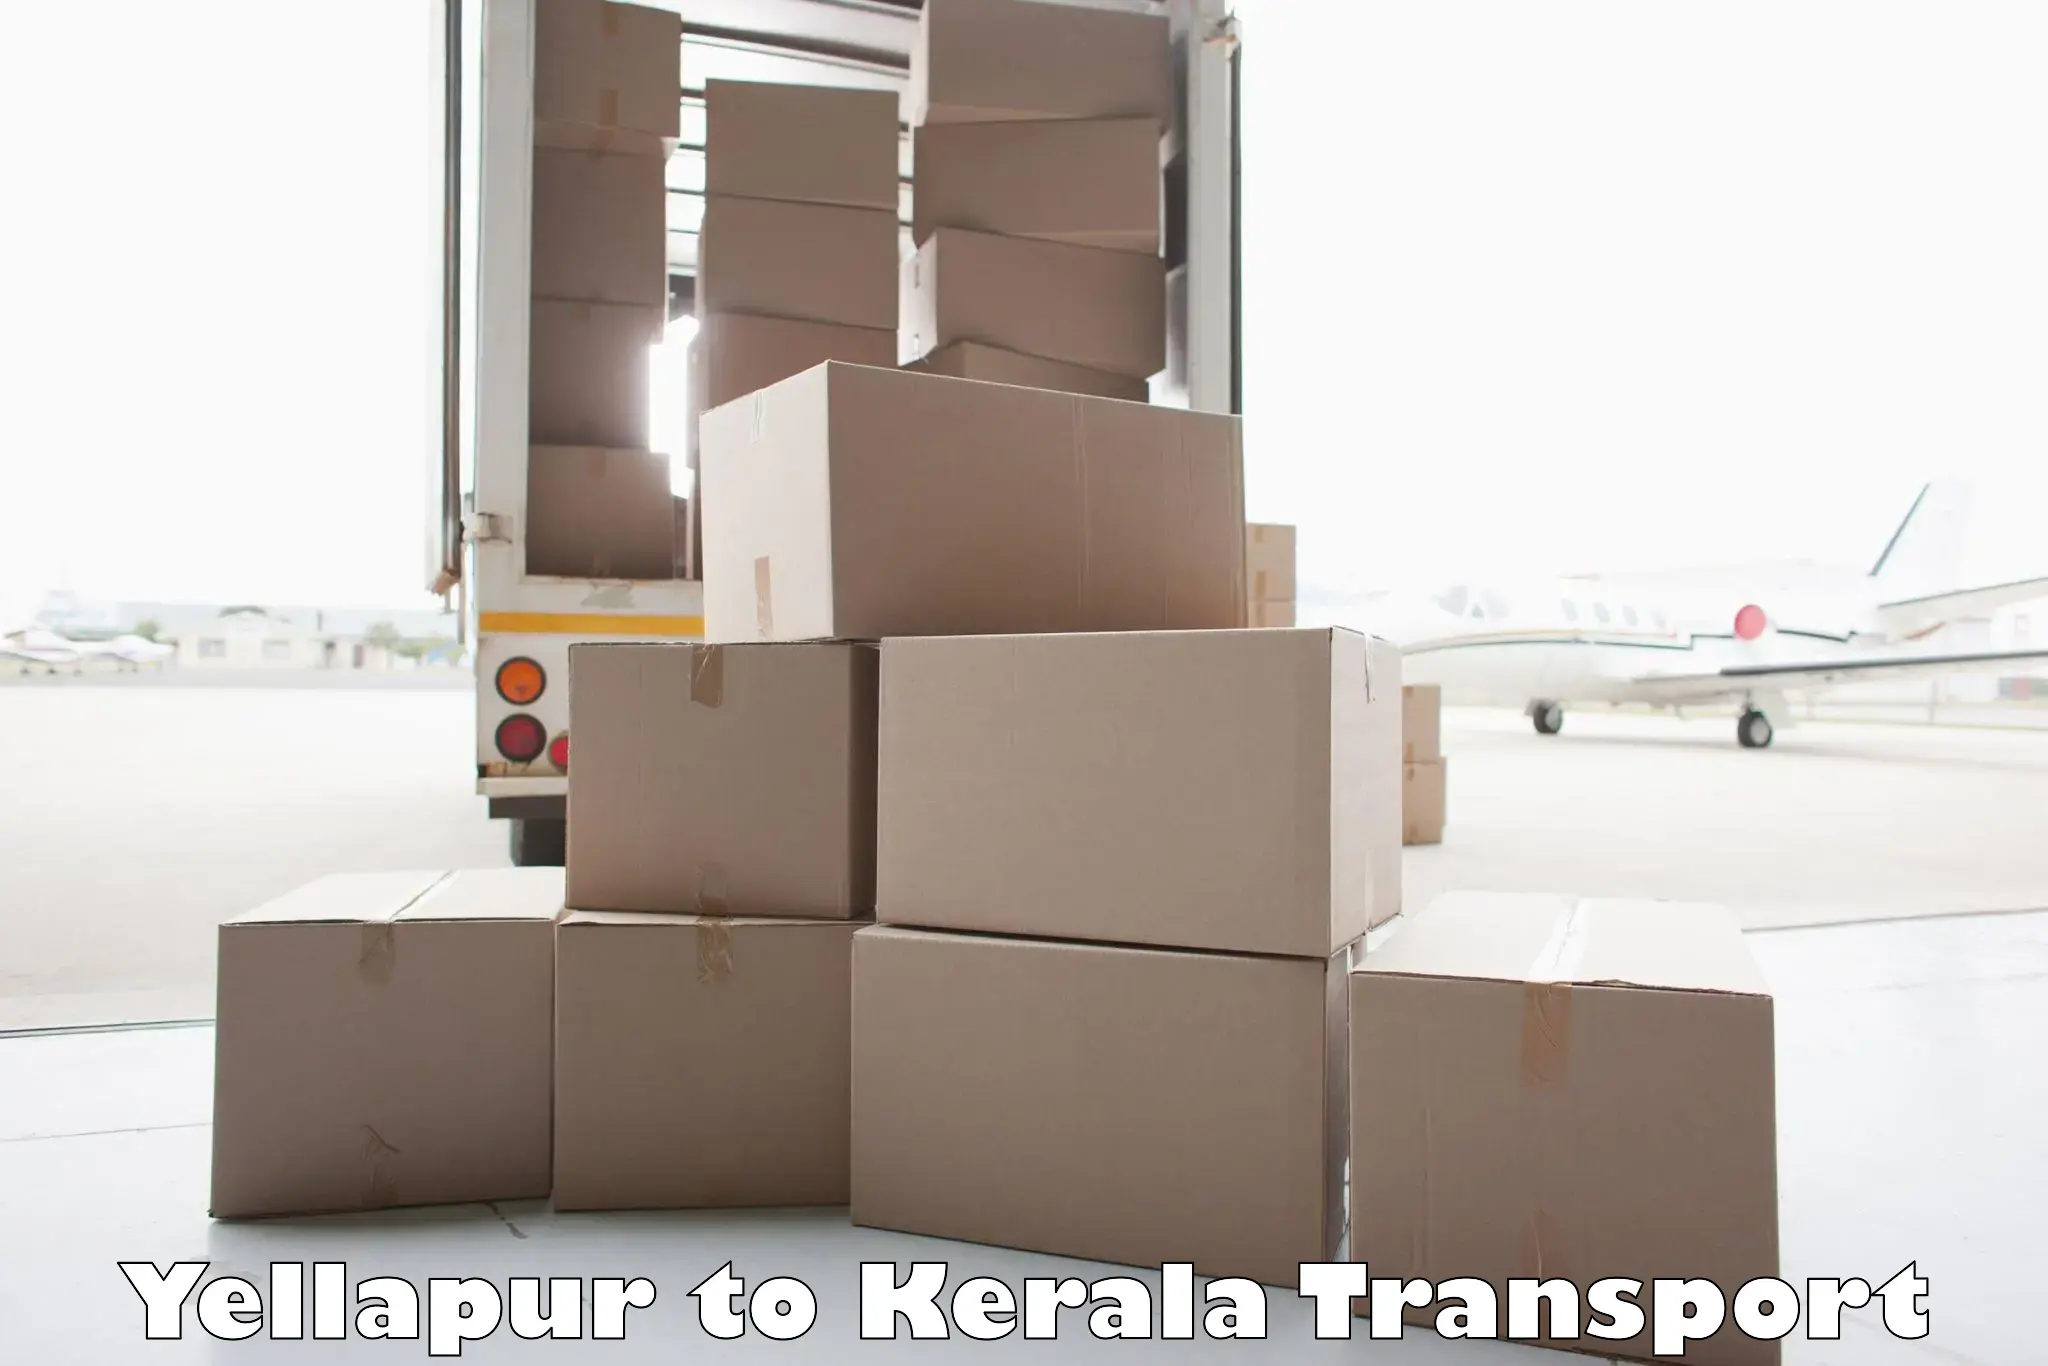 Transport in sharing Yellapur to Kottayam